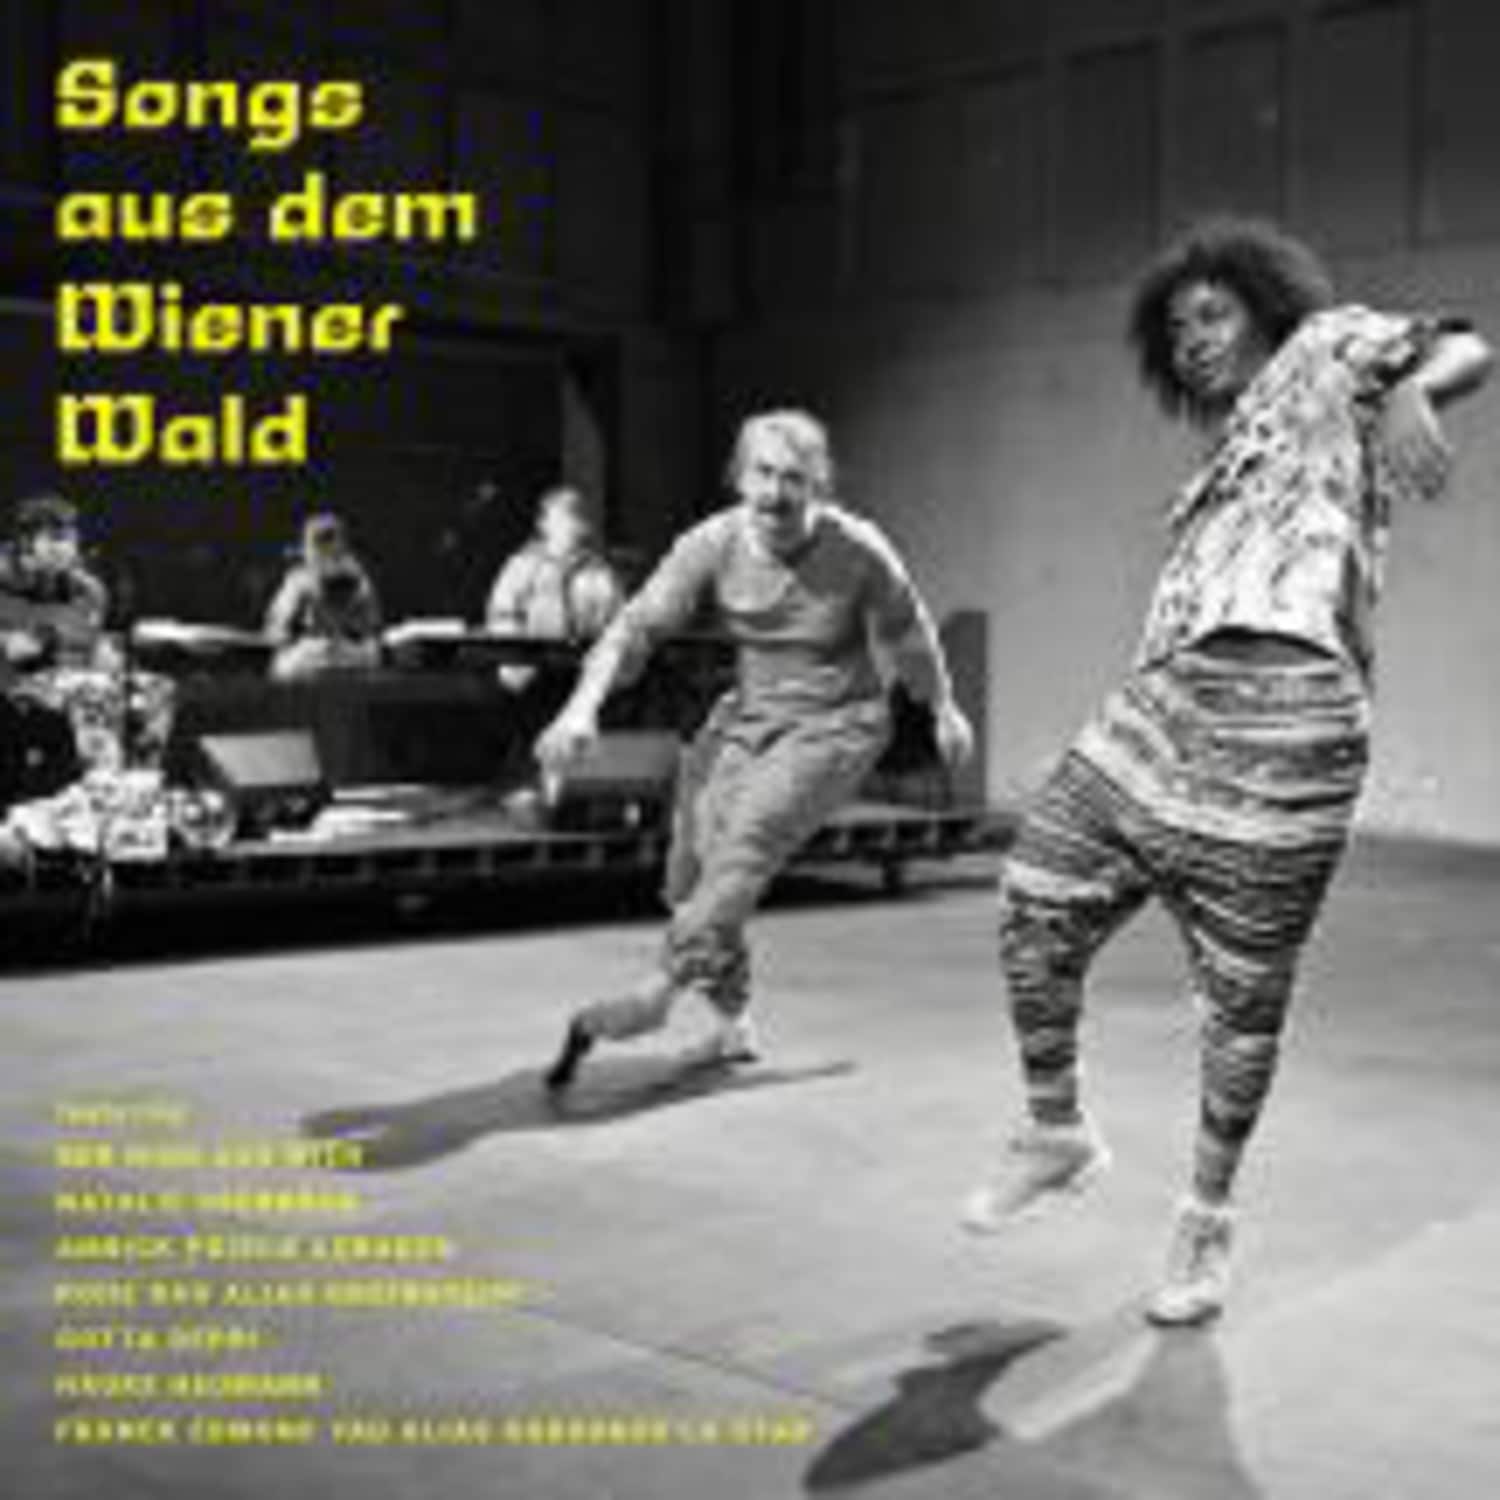 Der Nino aus Wien, Natalie Ofenbck, Gadoukou La S - SONGS AUS DEM WIENER WALD